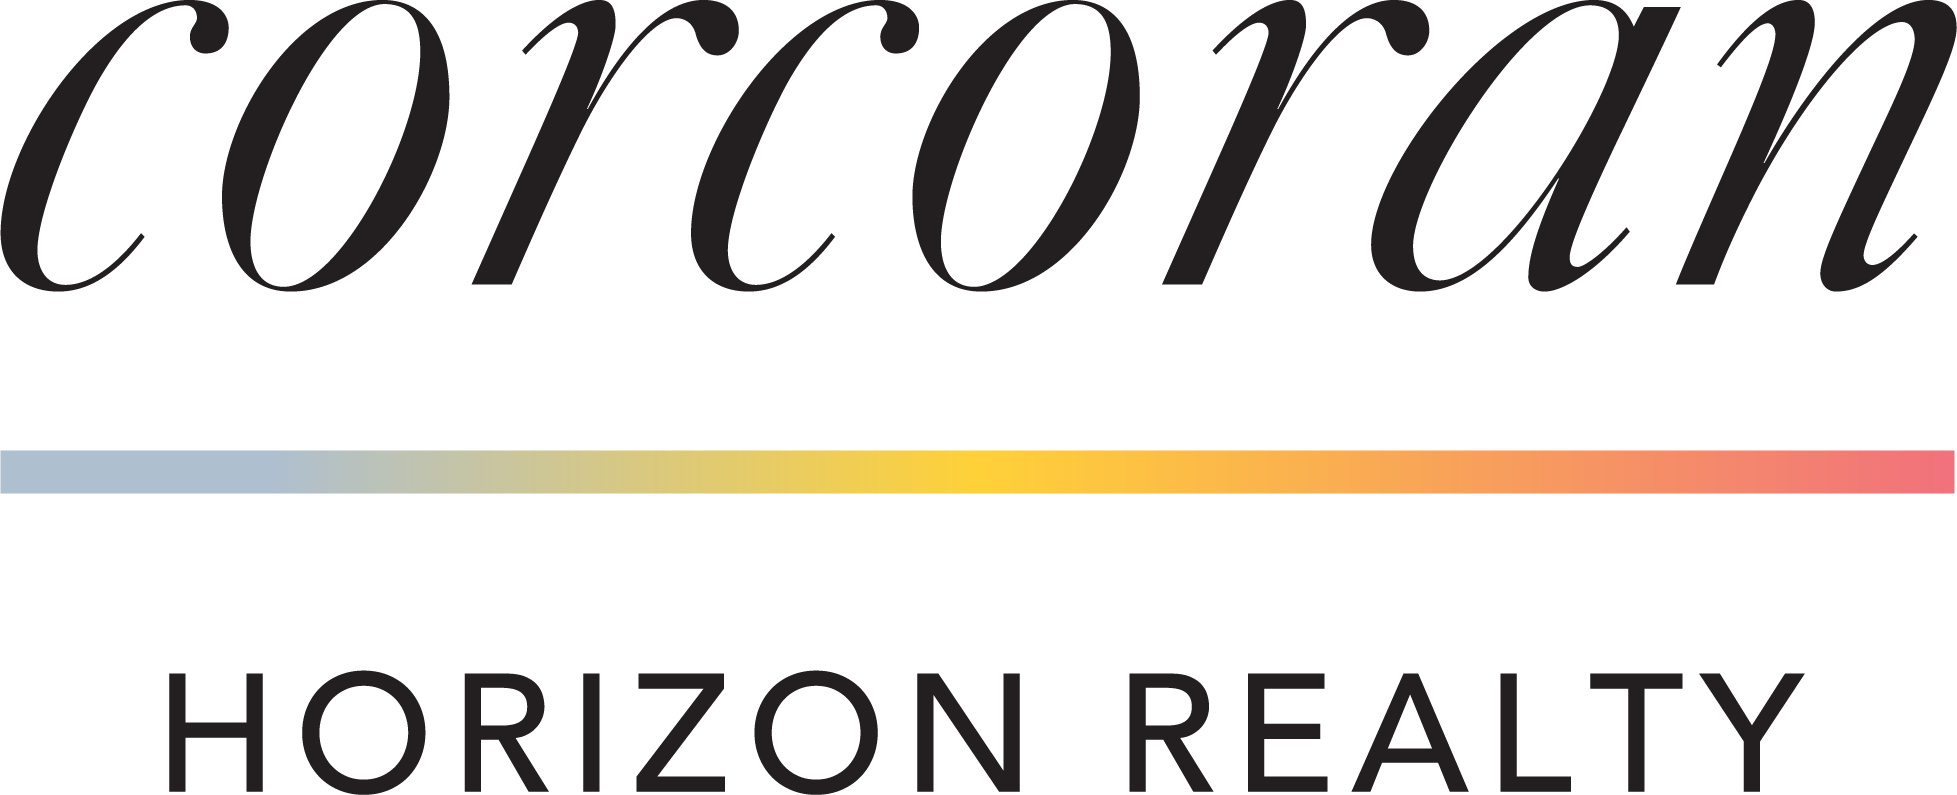 Corcoran Horizon Realty logo